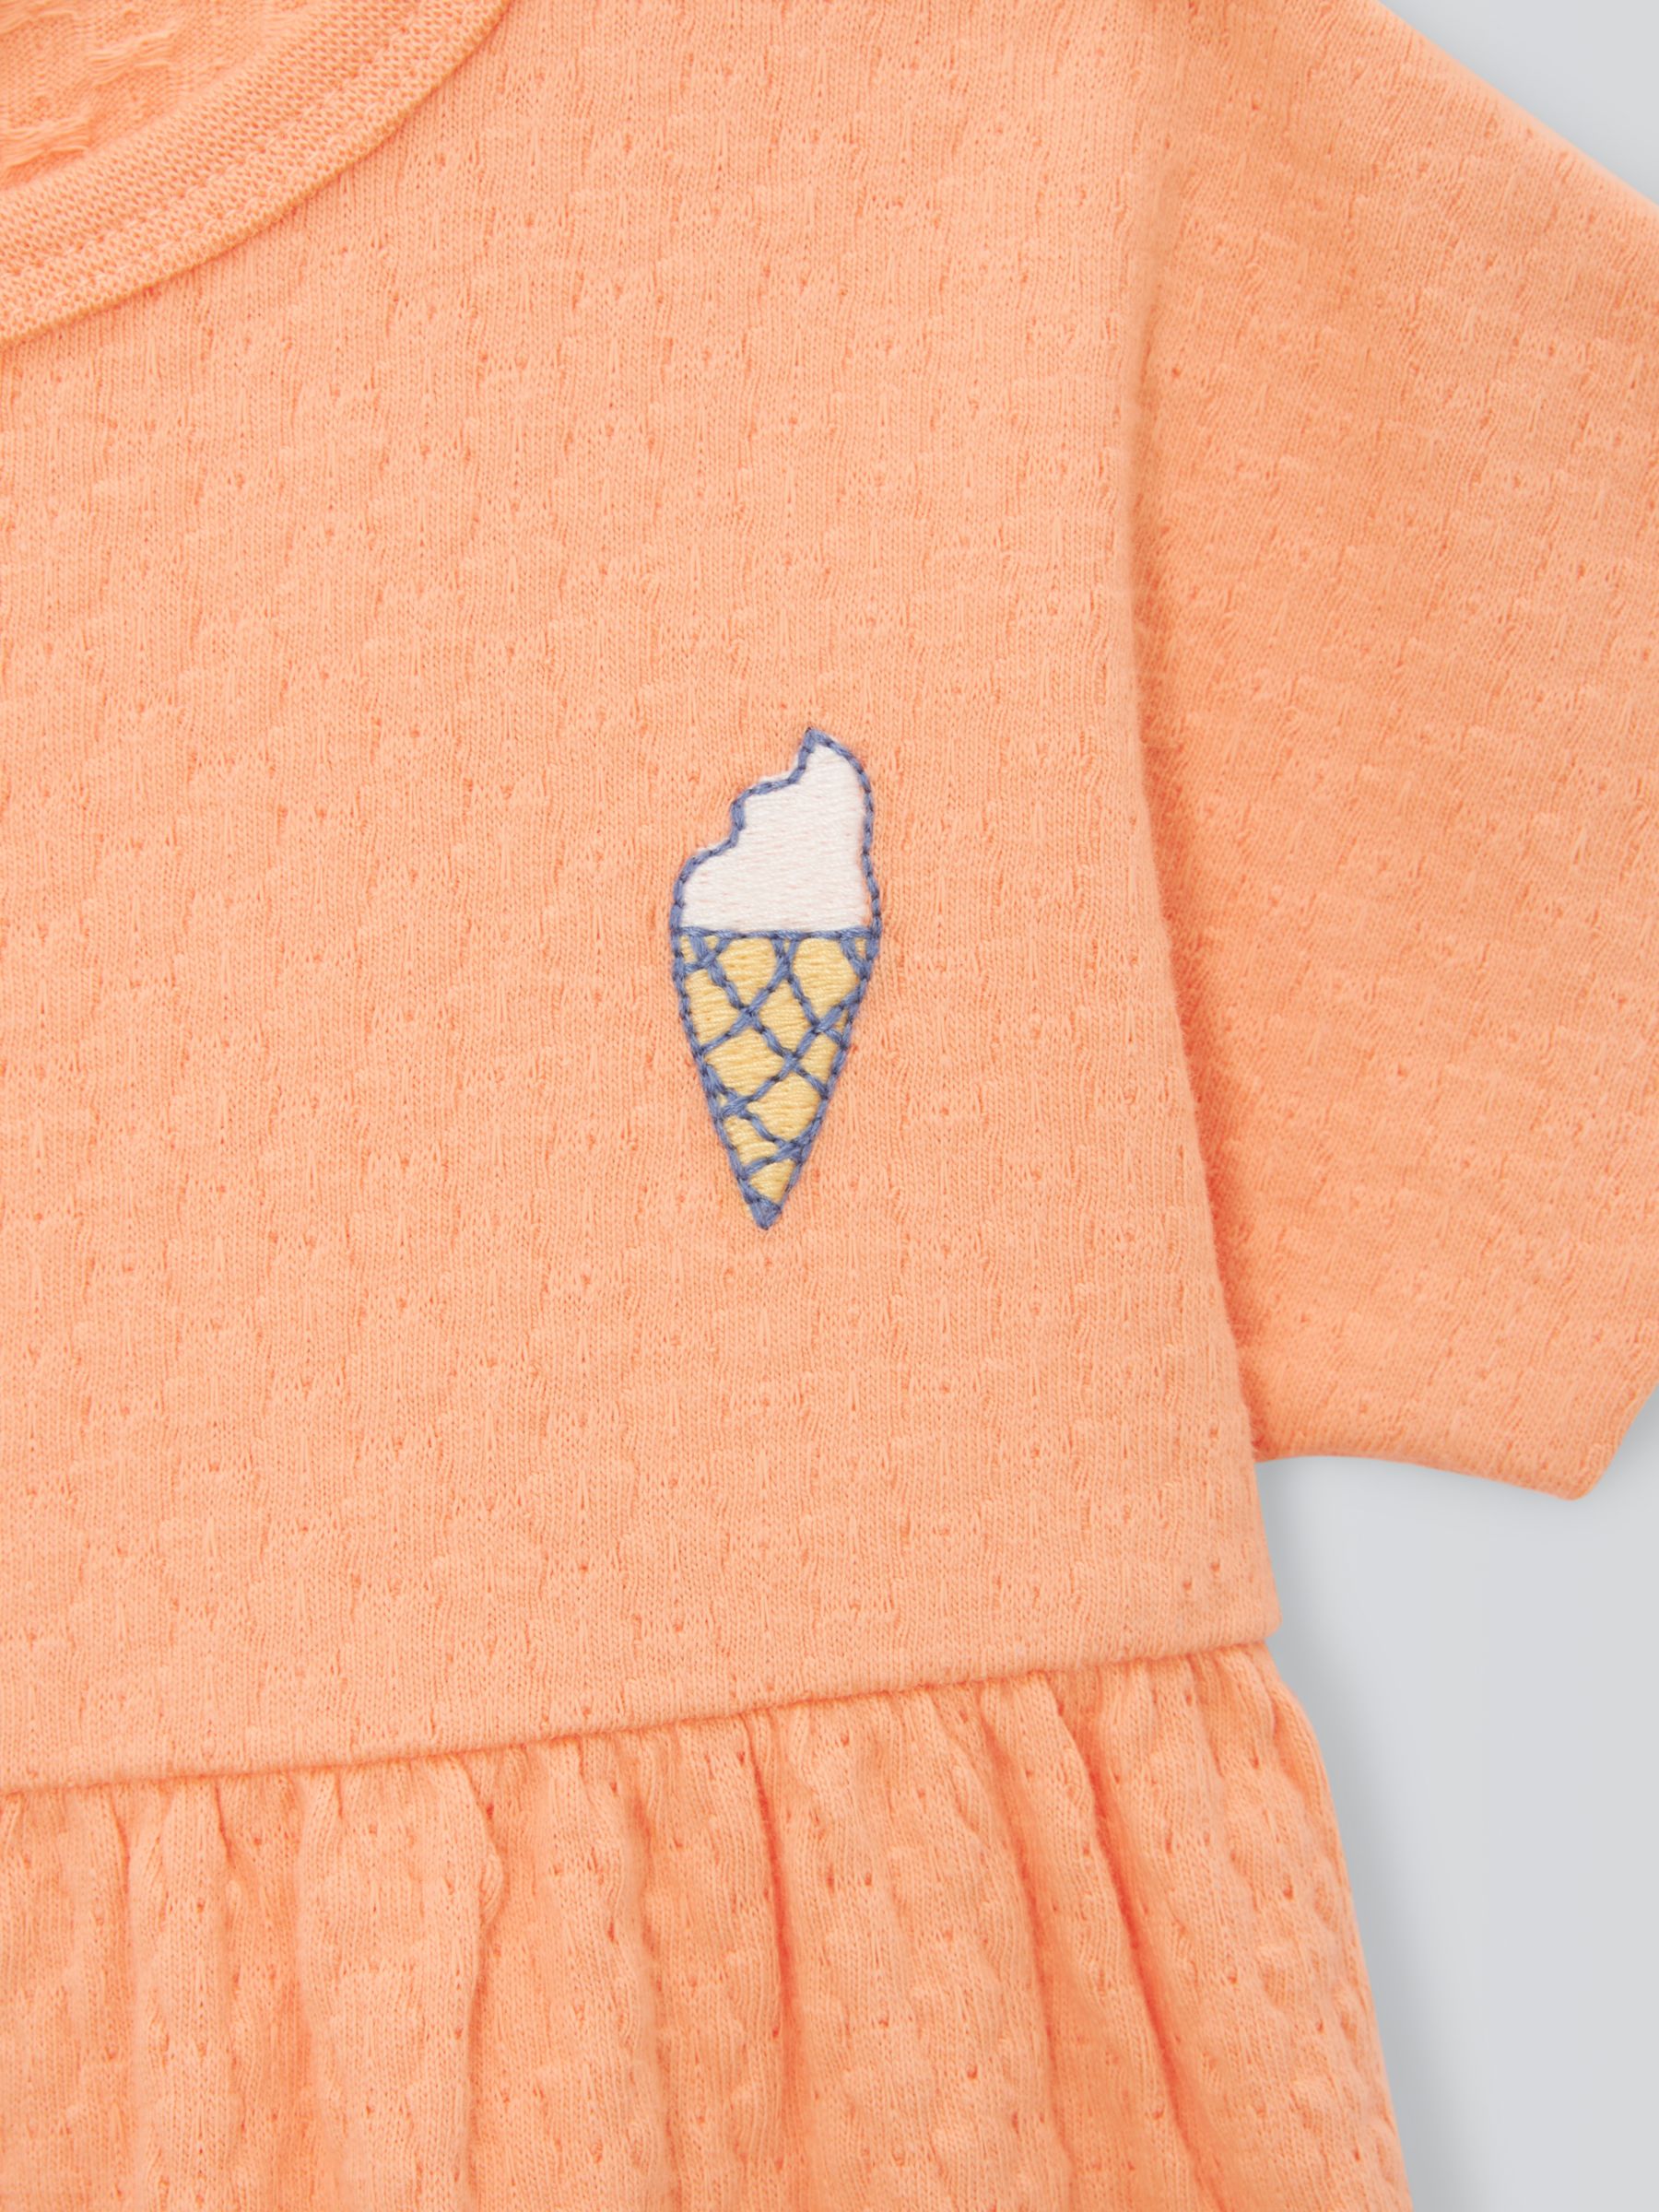 John Lewis ANYDAY Baby Honeycomb Embroidered Ice Cream Dress, Orange, 2-3 years